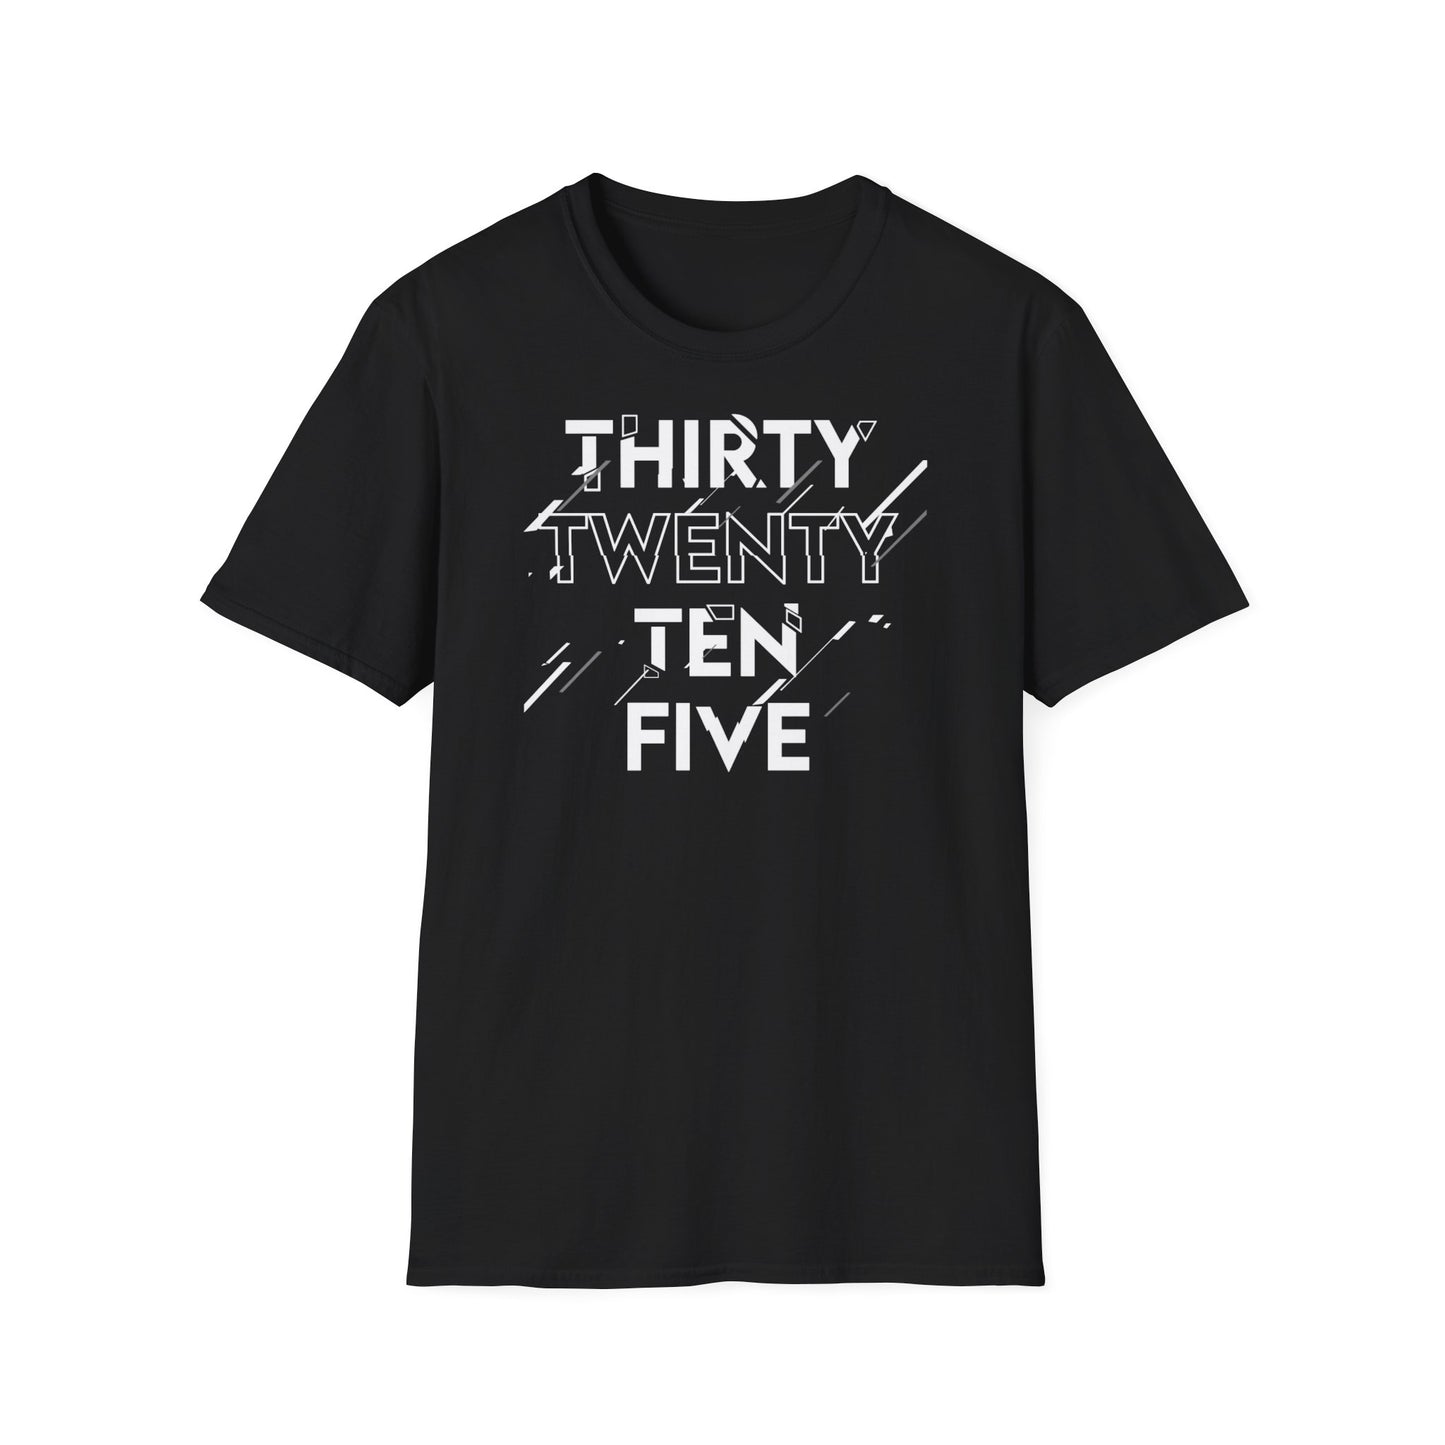 Unisex Softstyle T-Shirt - "Thirty, Twenty, Ten, Five"